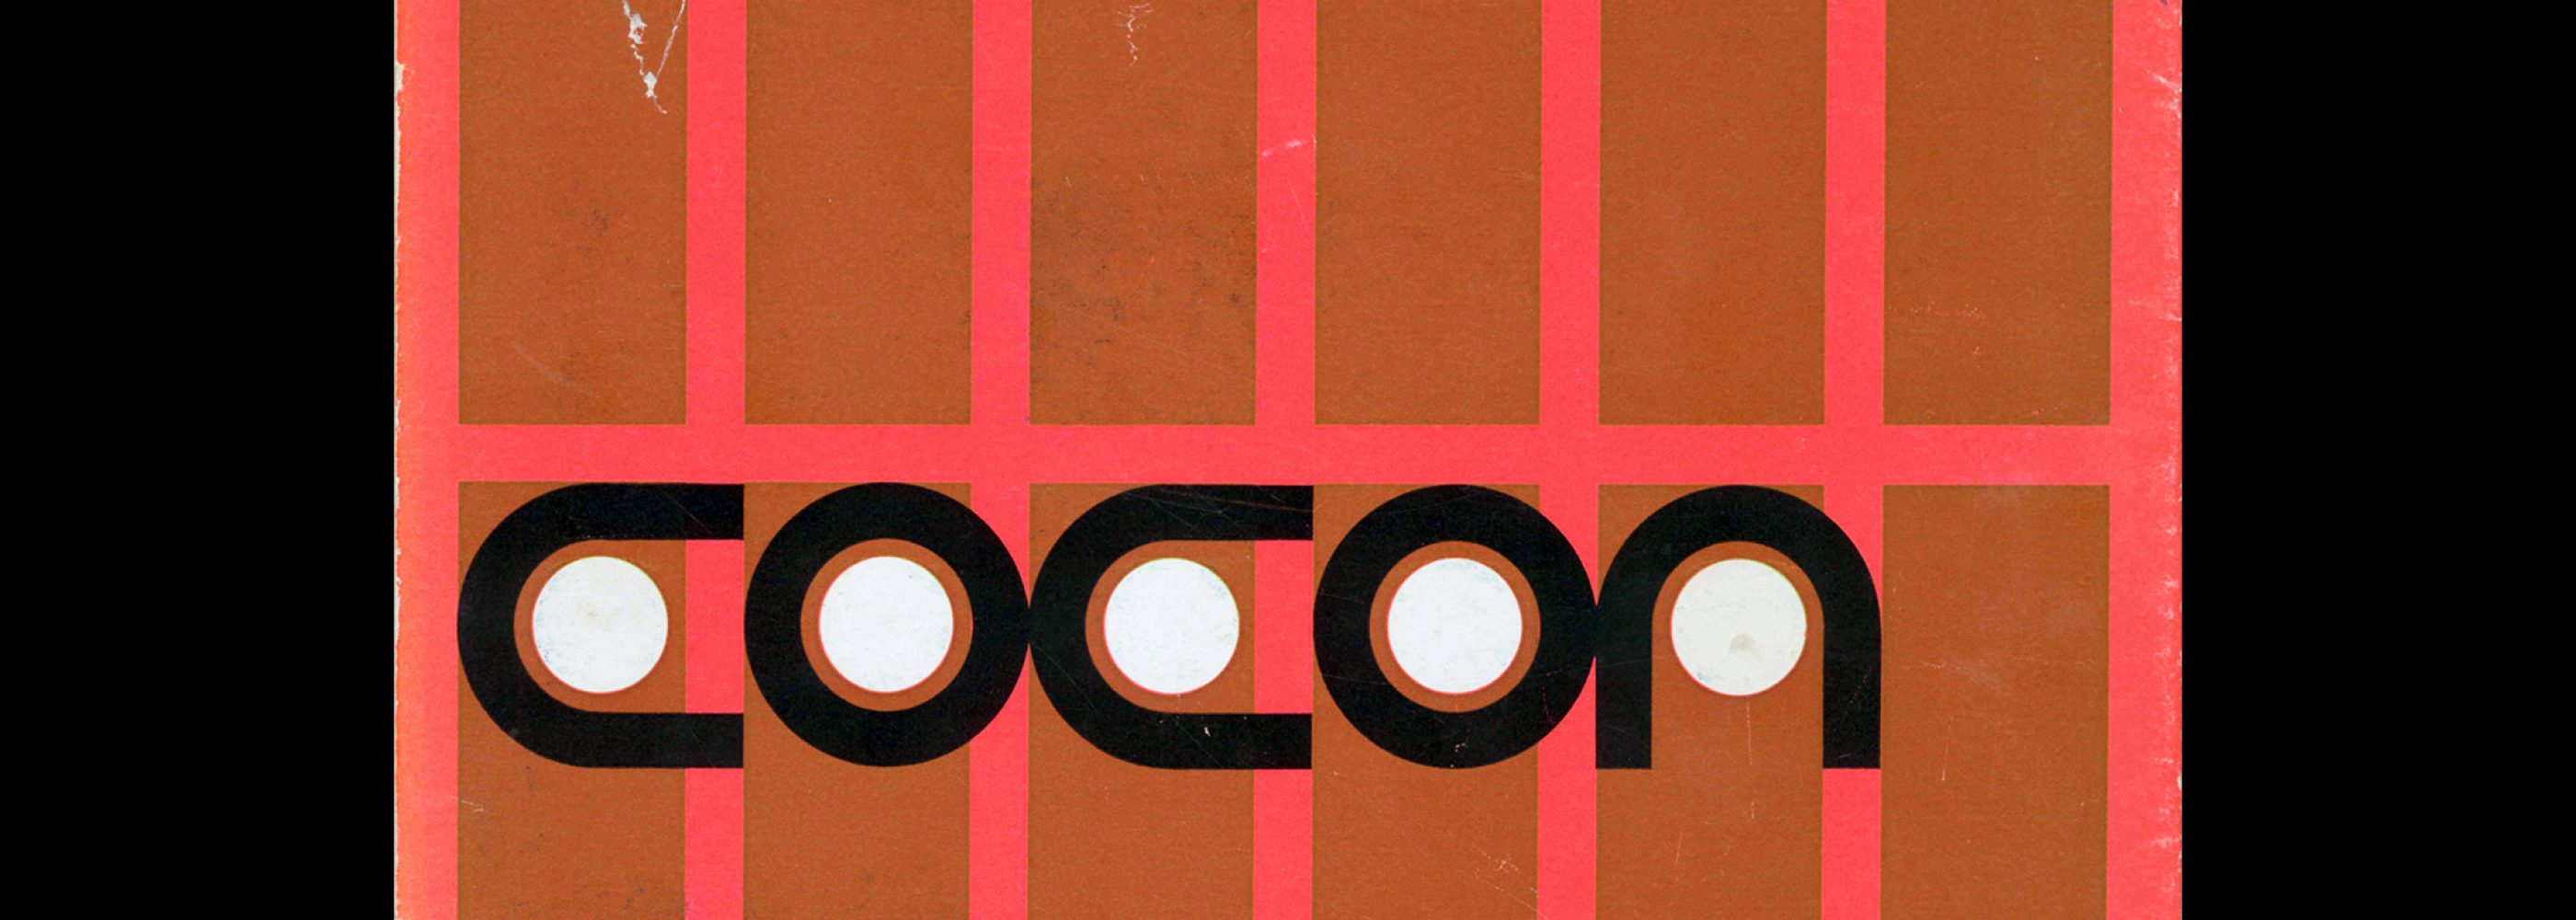 Cocon, Thomas Rap, 1967. Designed by Wim Wandel